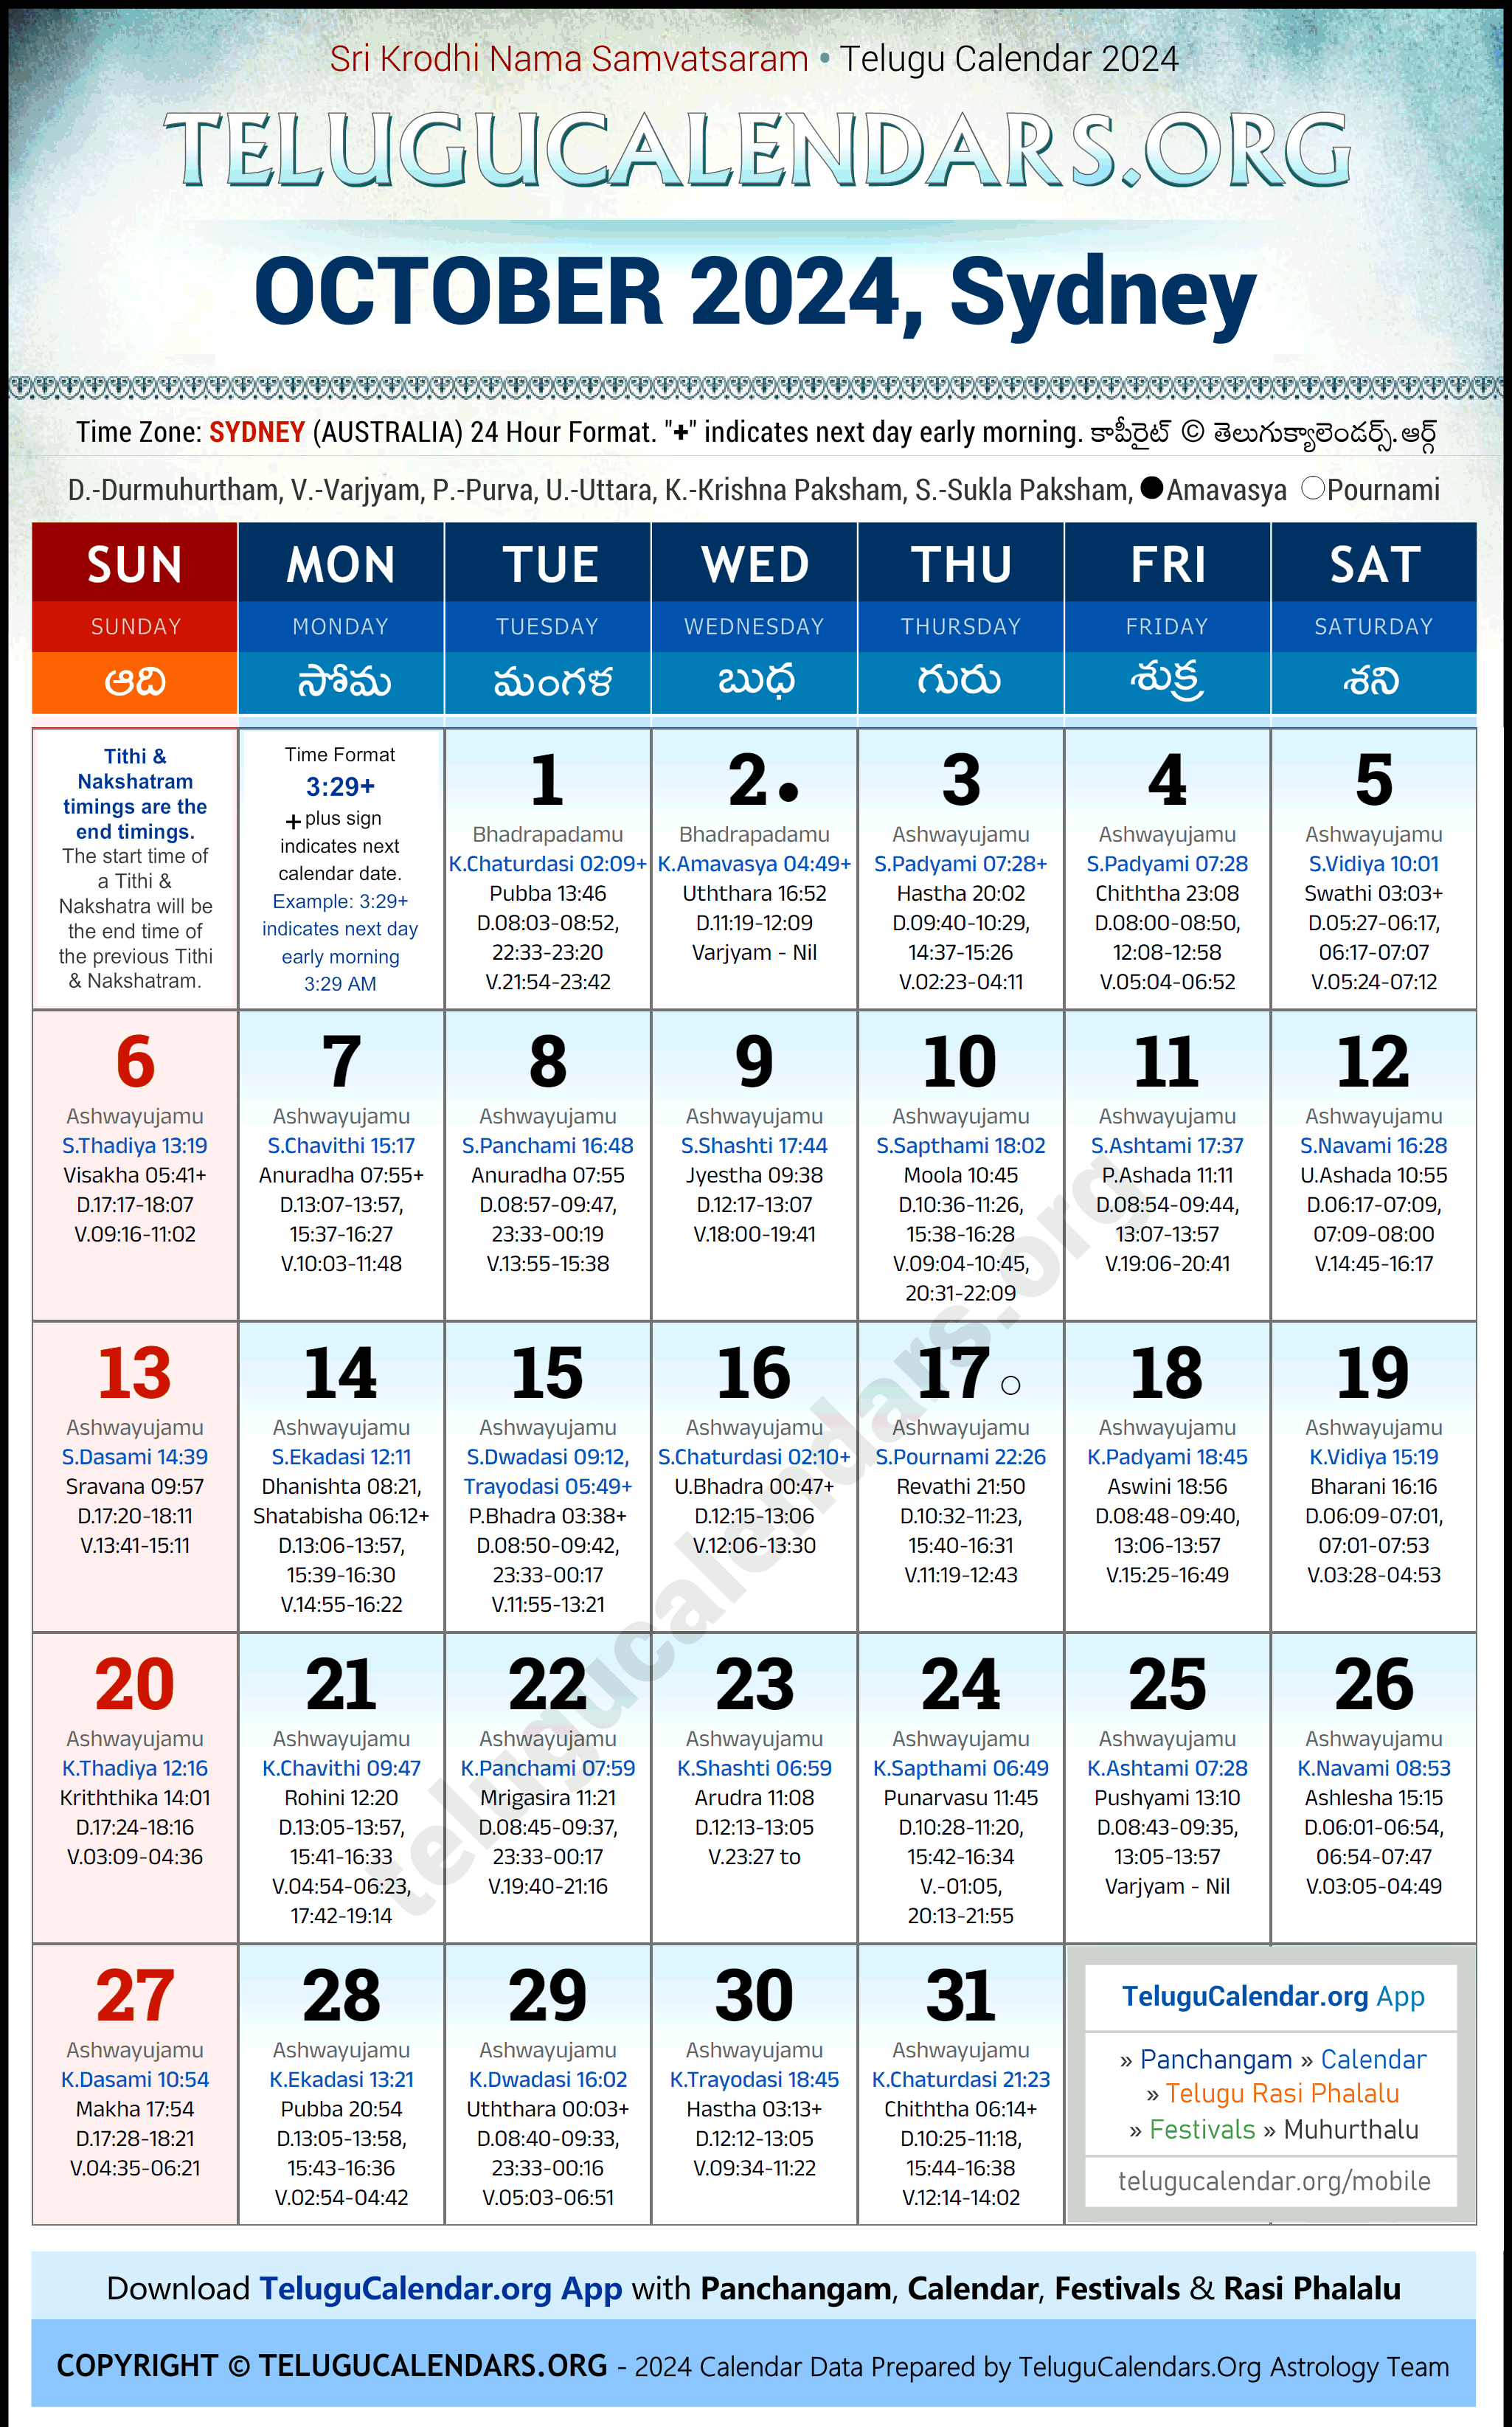 Telugu Calendar 2024 October Festivals for Sydney